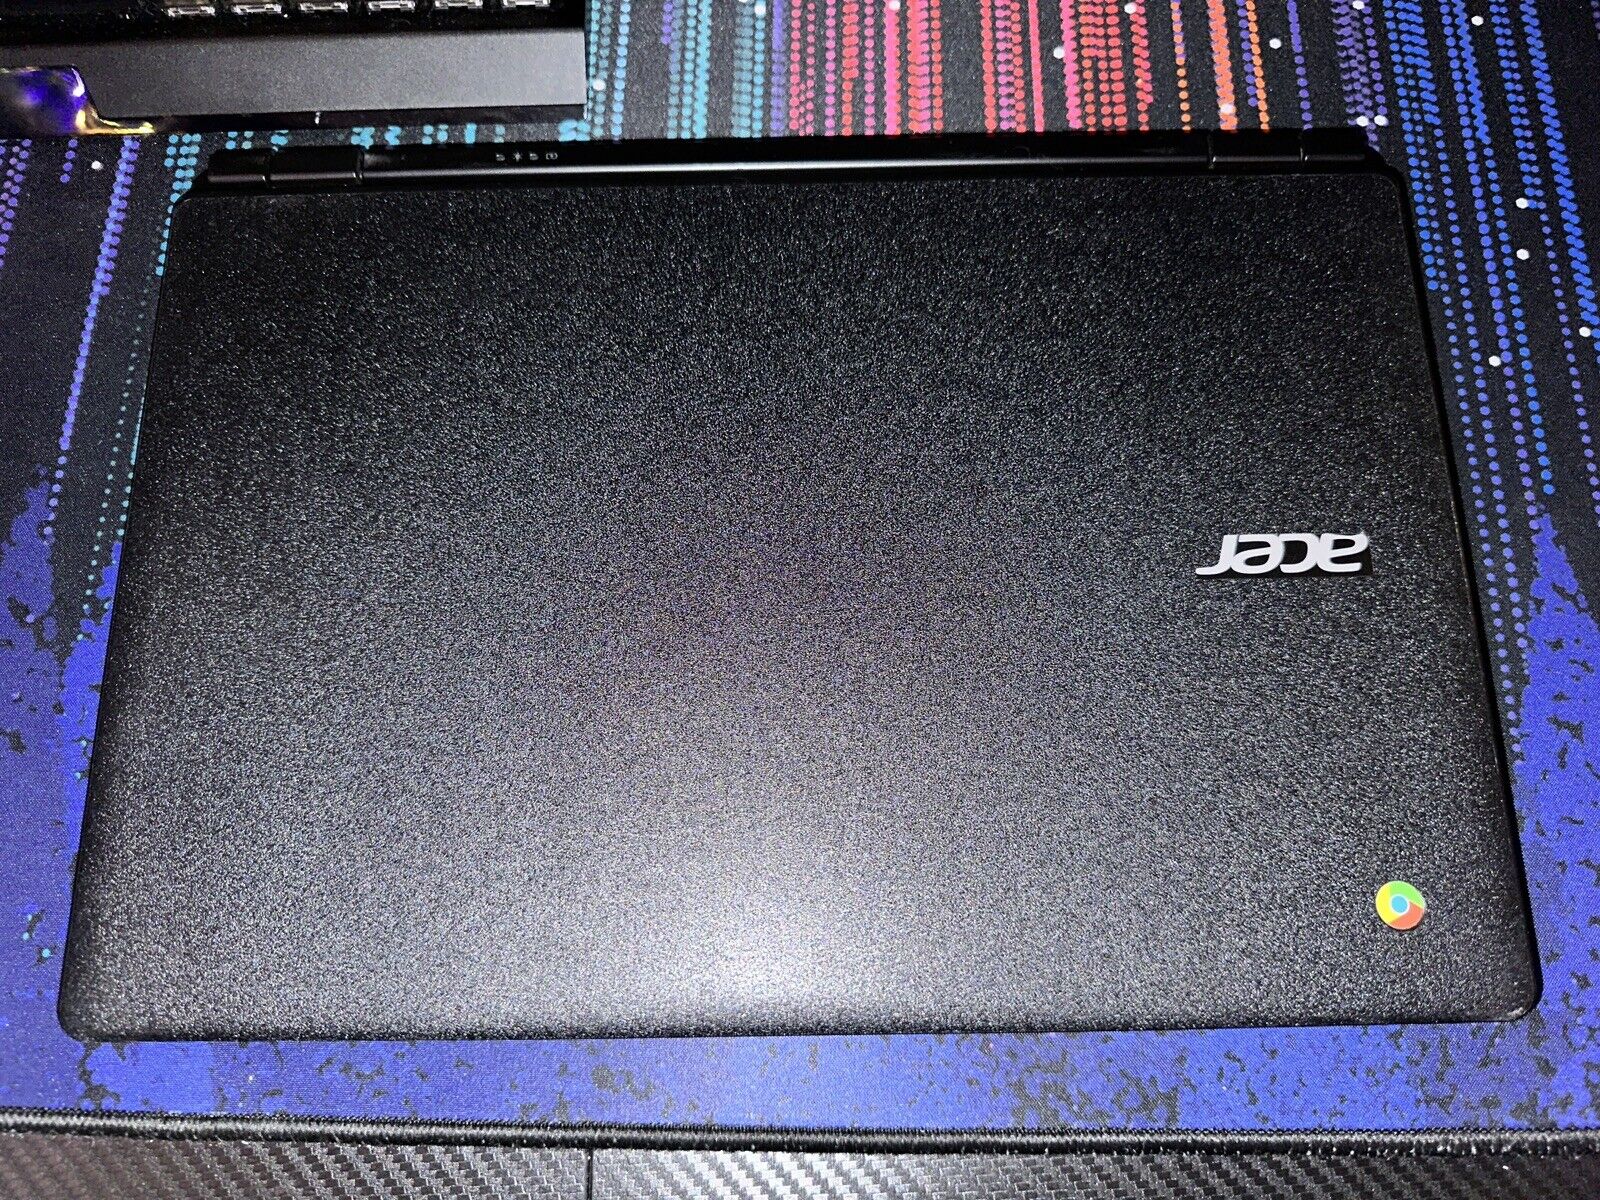 Acer Chromebook C810 13.3